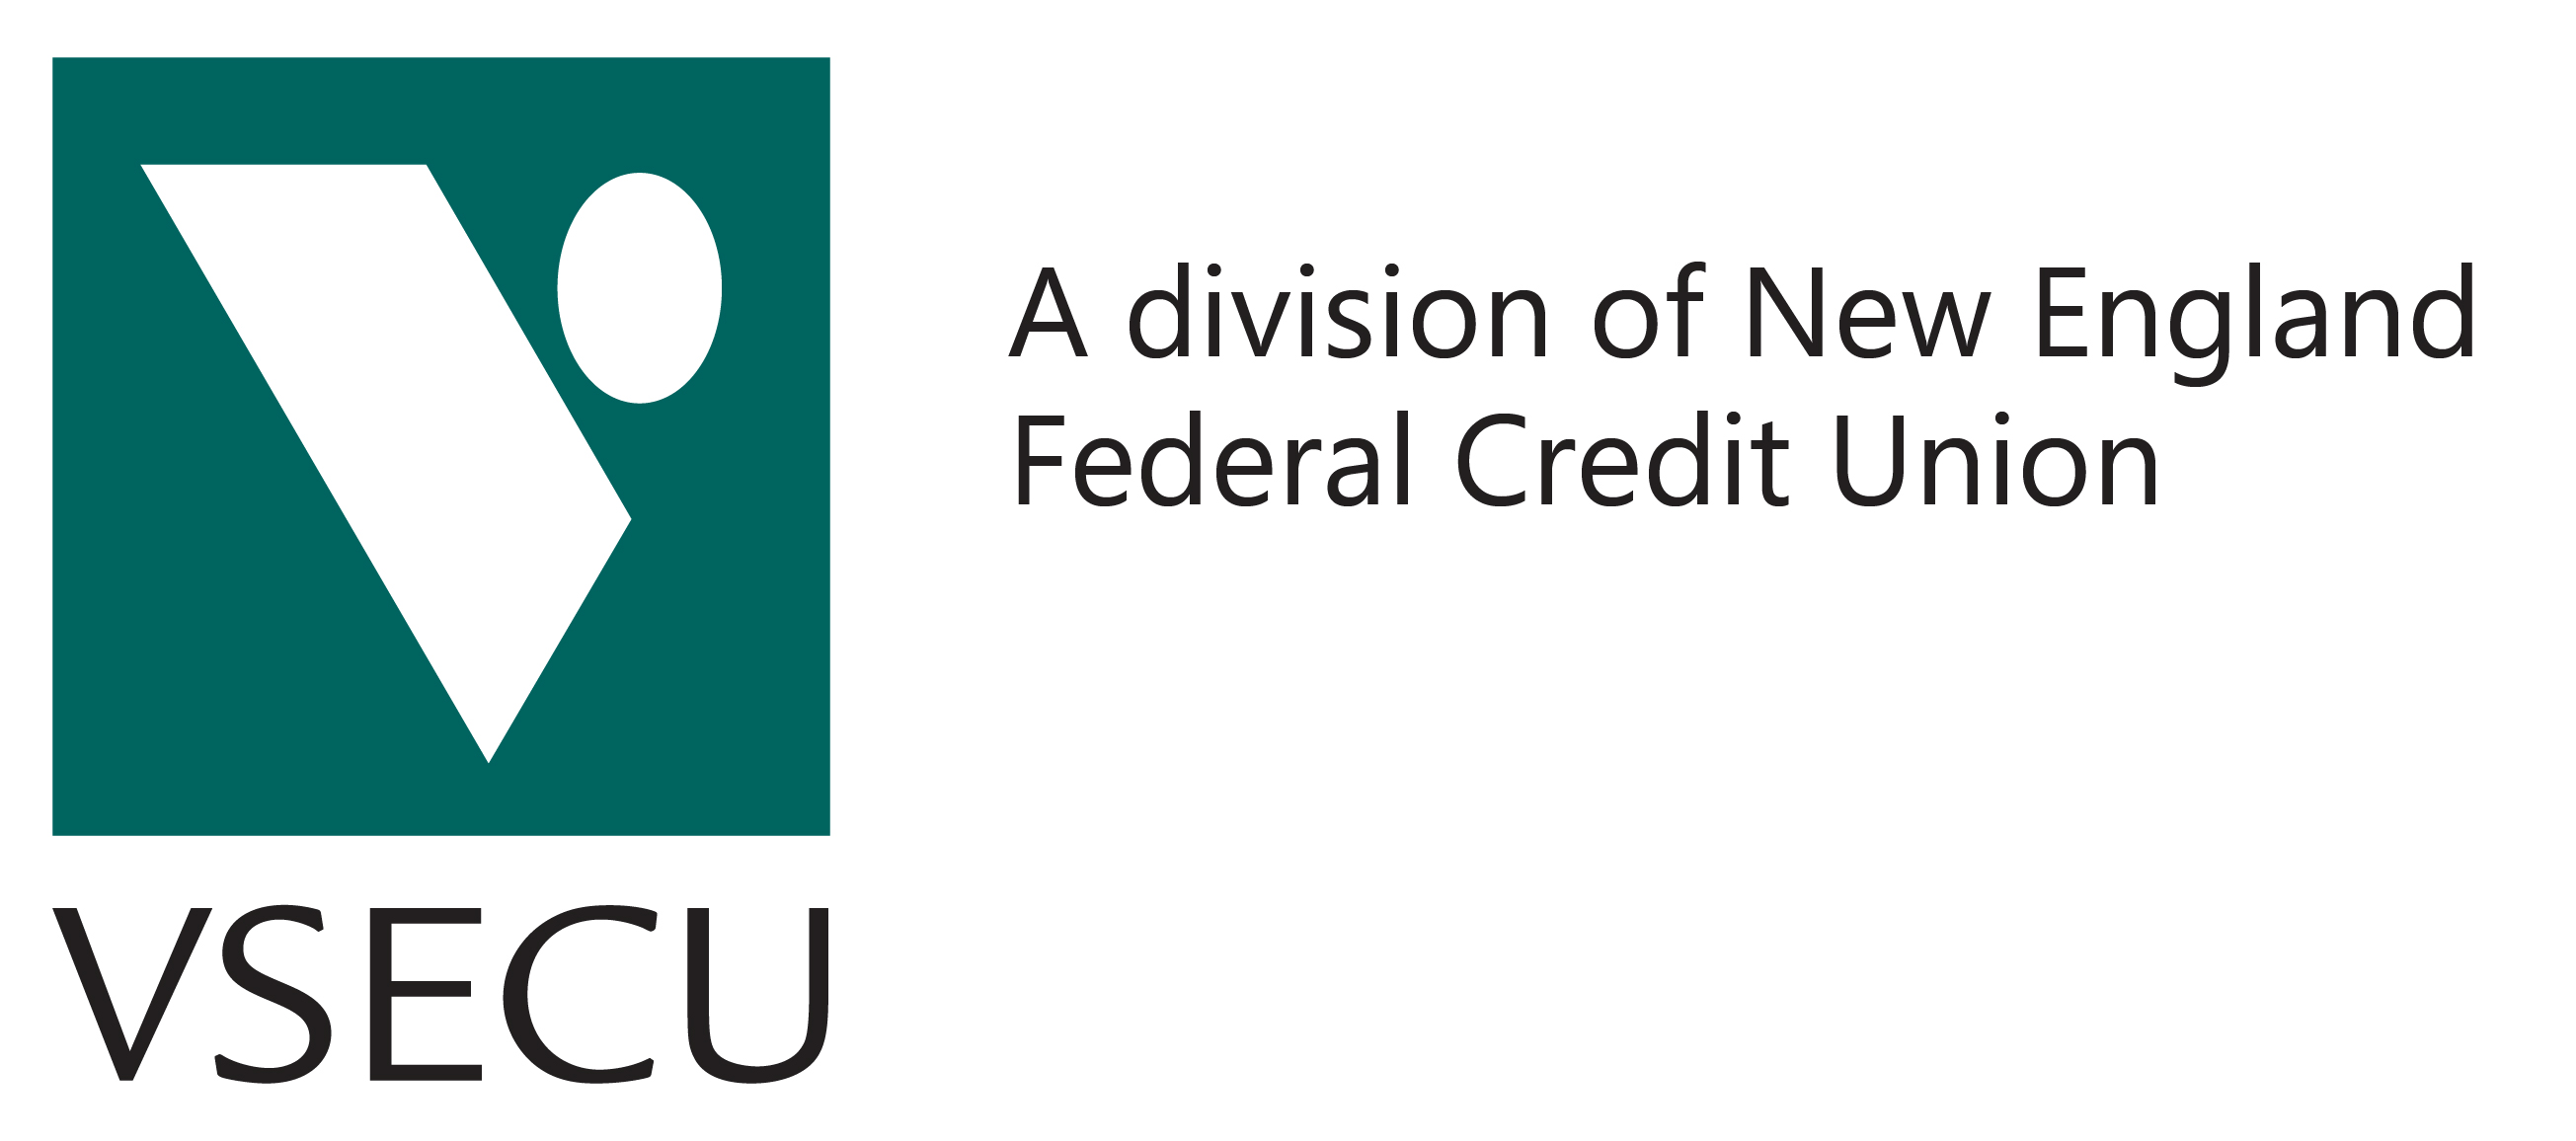 VSECU, a division of New England Federal Credit Union LOGO MOCKUP - Horizontal